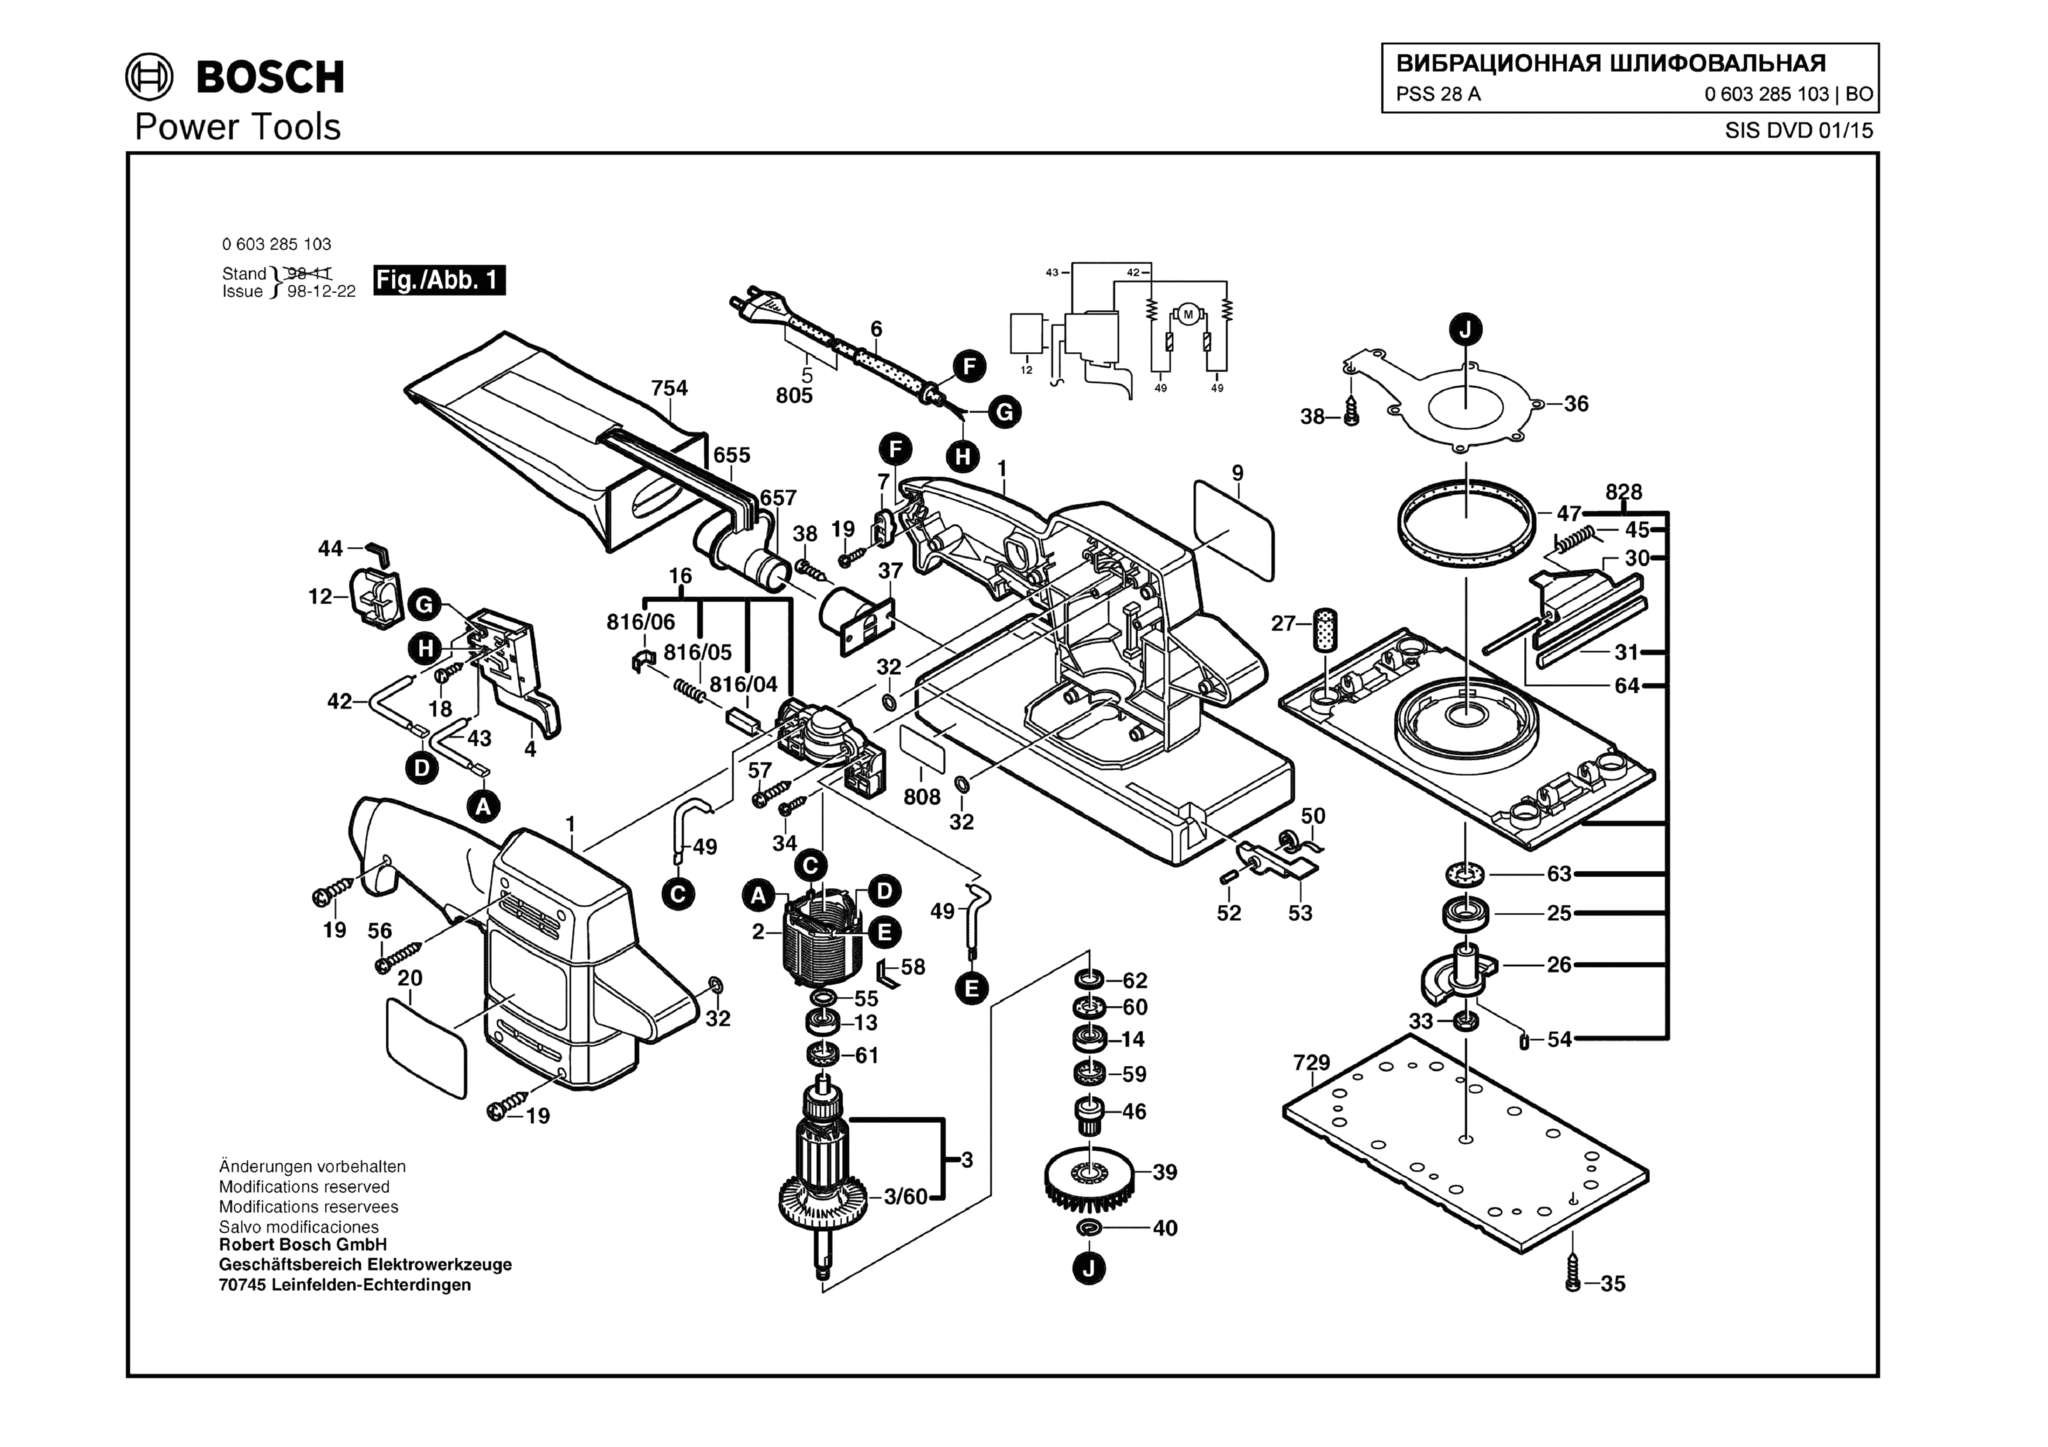 Запчасти, схема и деталировка Bosch PSS 28 A (ТИП 0603285103)